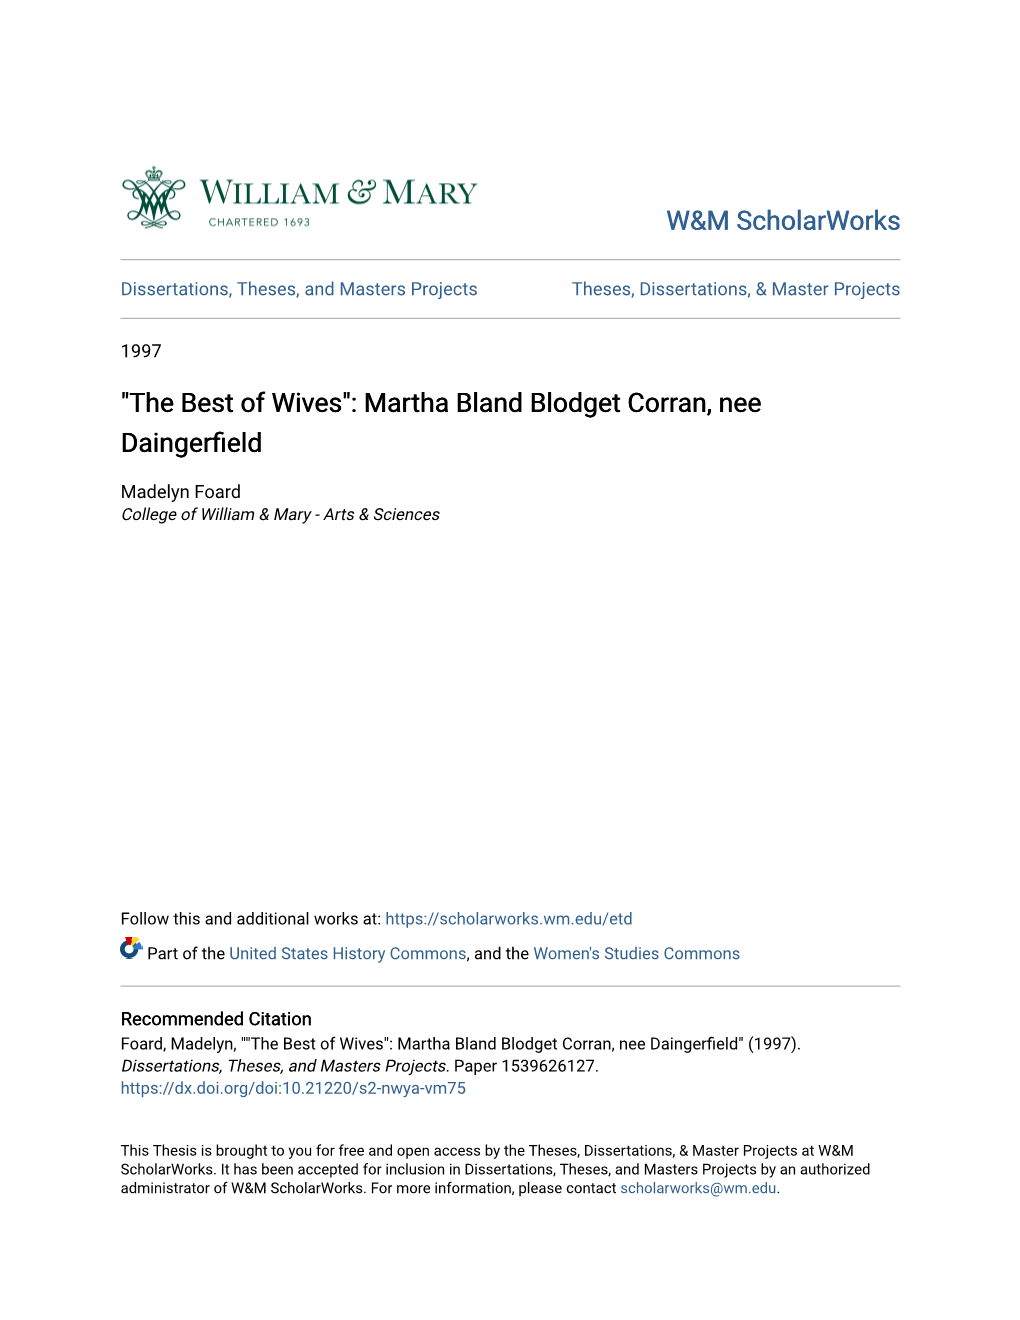 "The Best of Wives": Martha Bland Blodget Corran, Nee Daingerfield